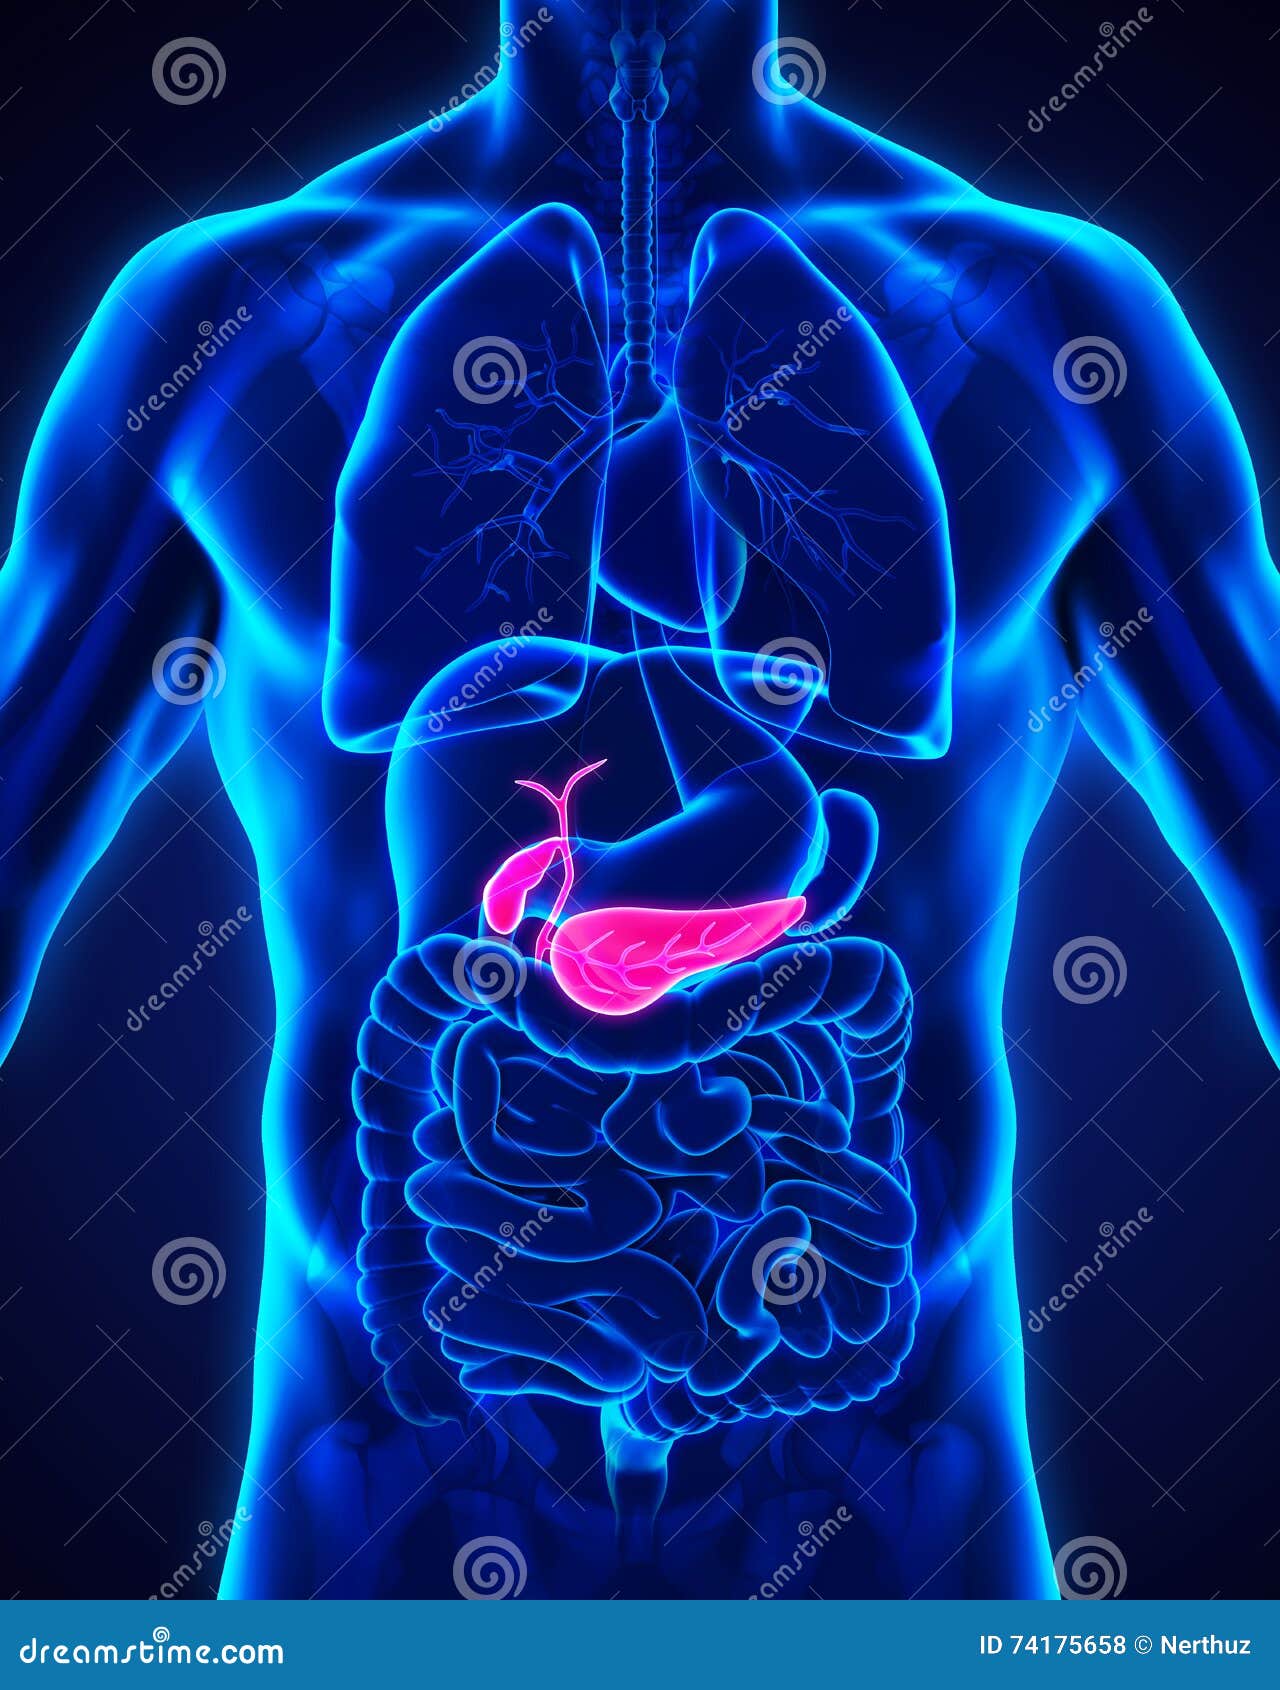 Human Gallbladder And Pancreas Anatomy Stock Illustration